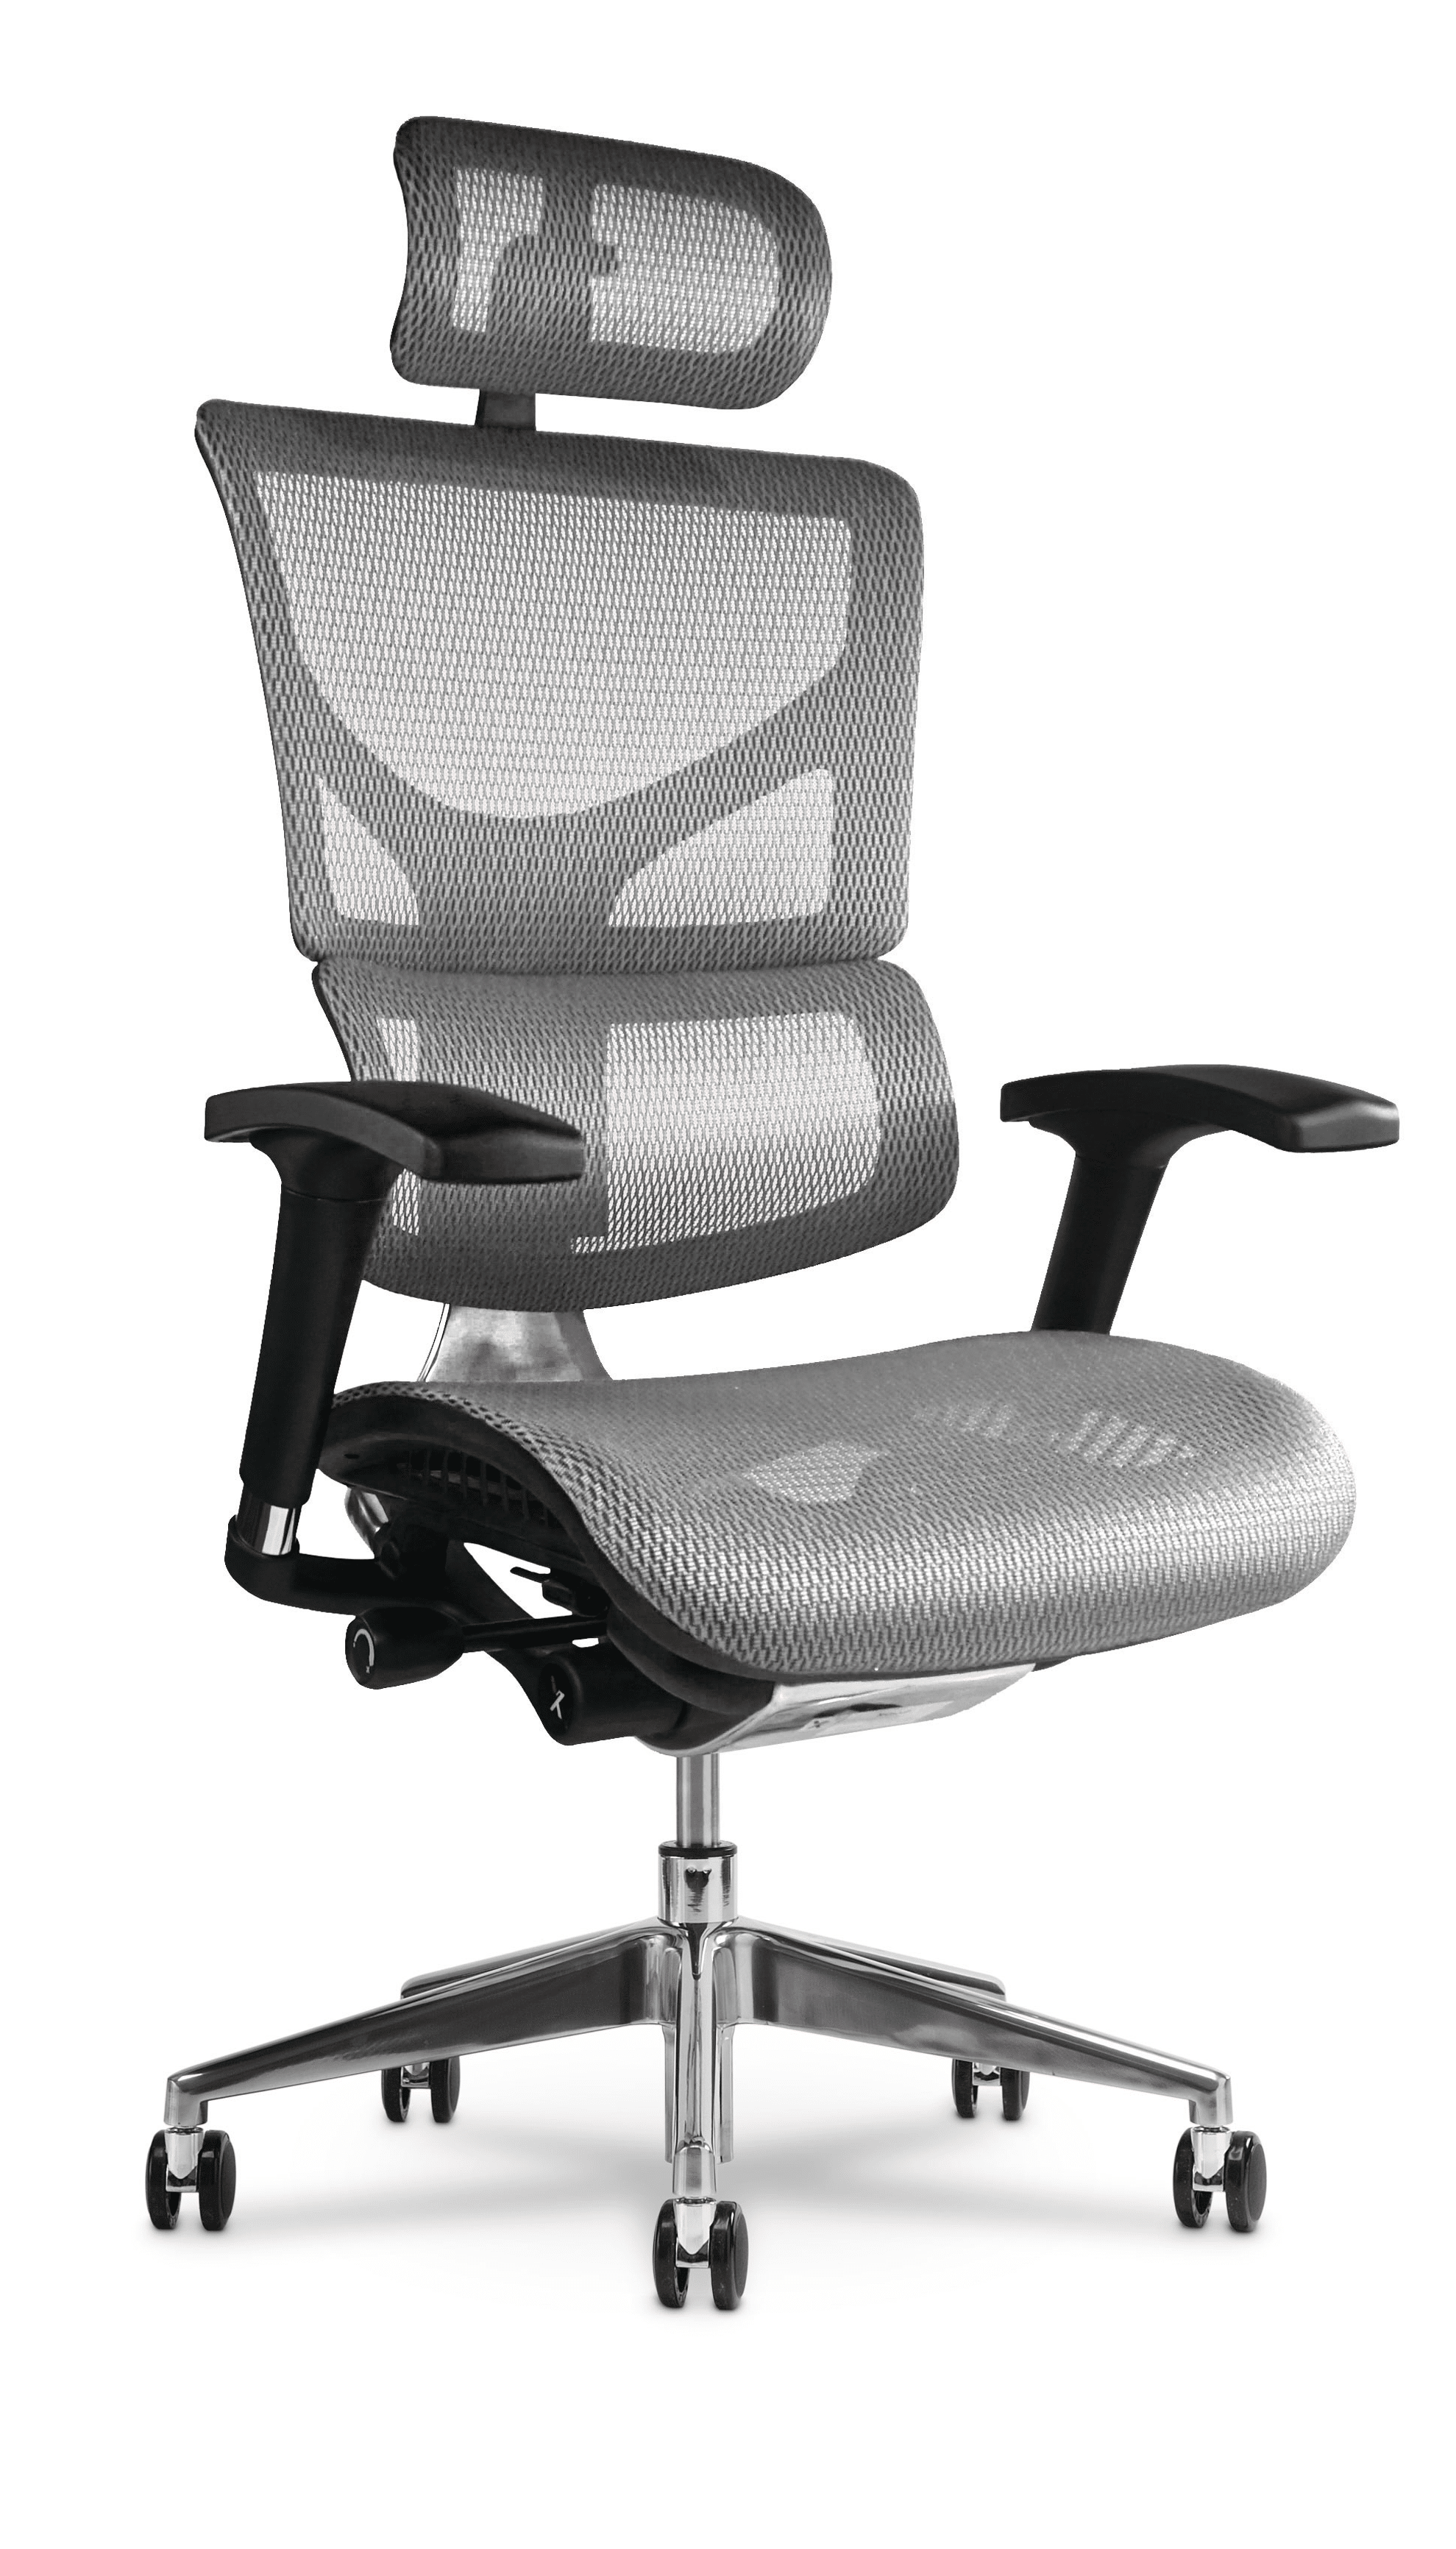 X-Chair Ergonomic Office Chair - X2 with Headrest